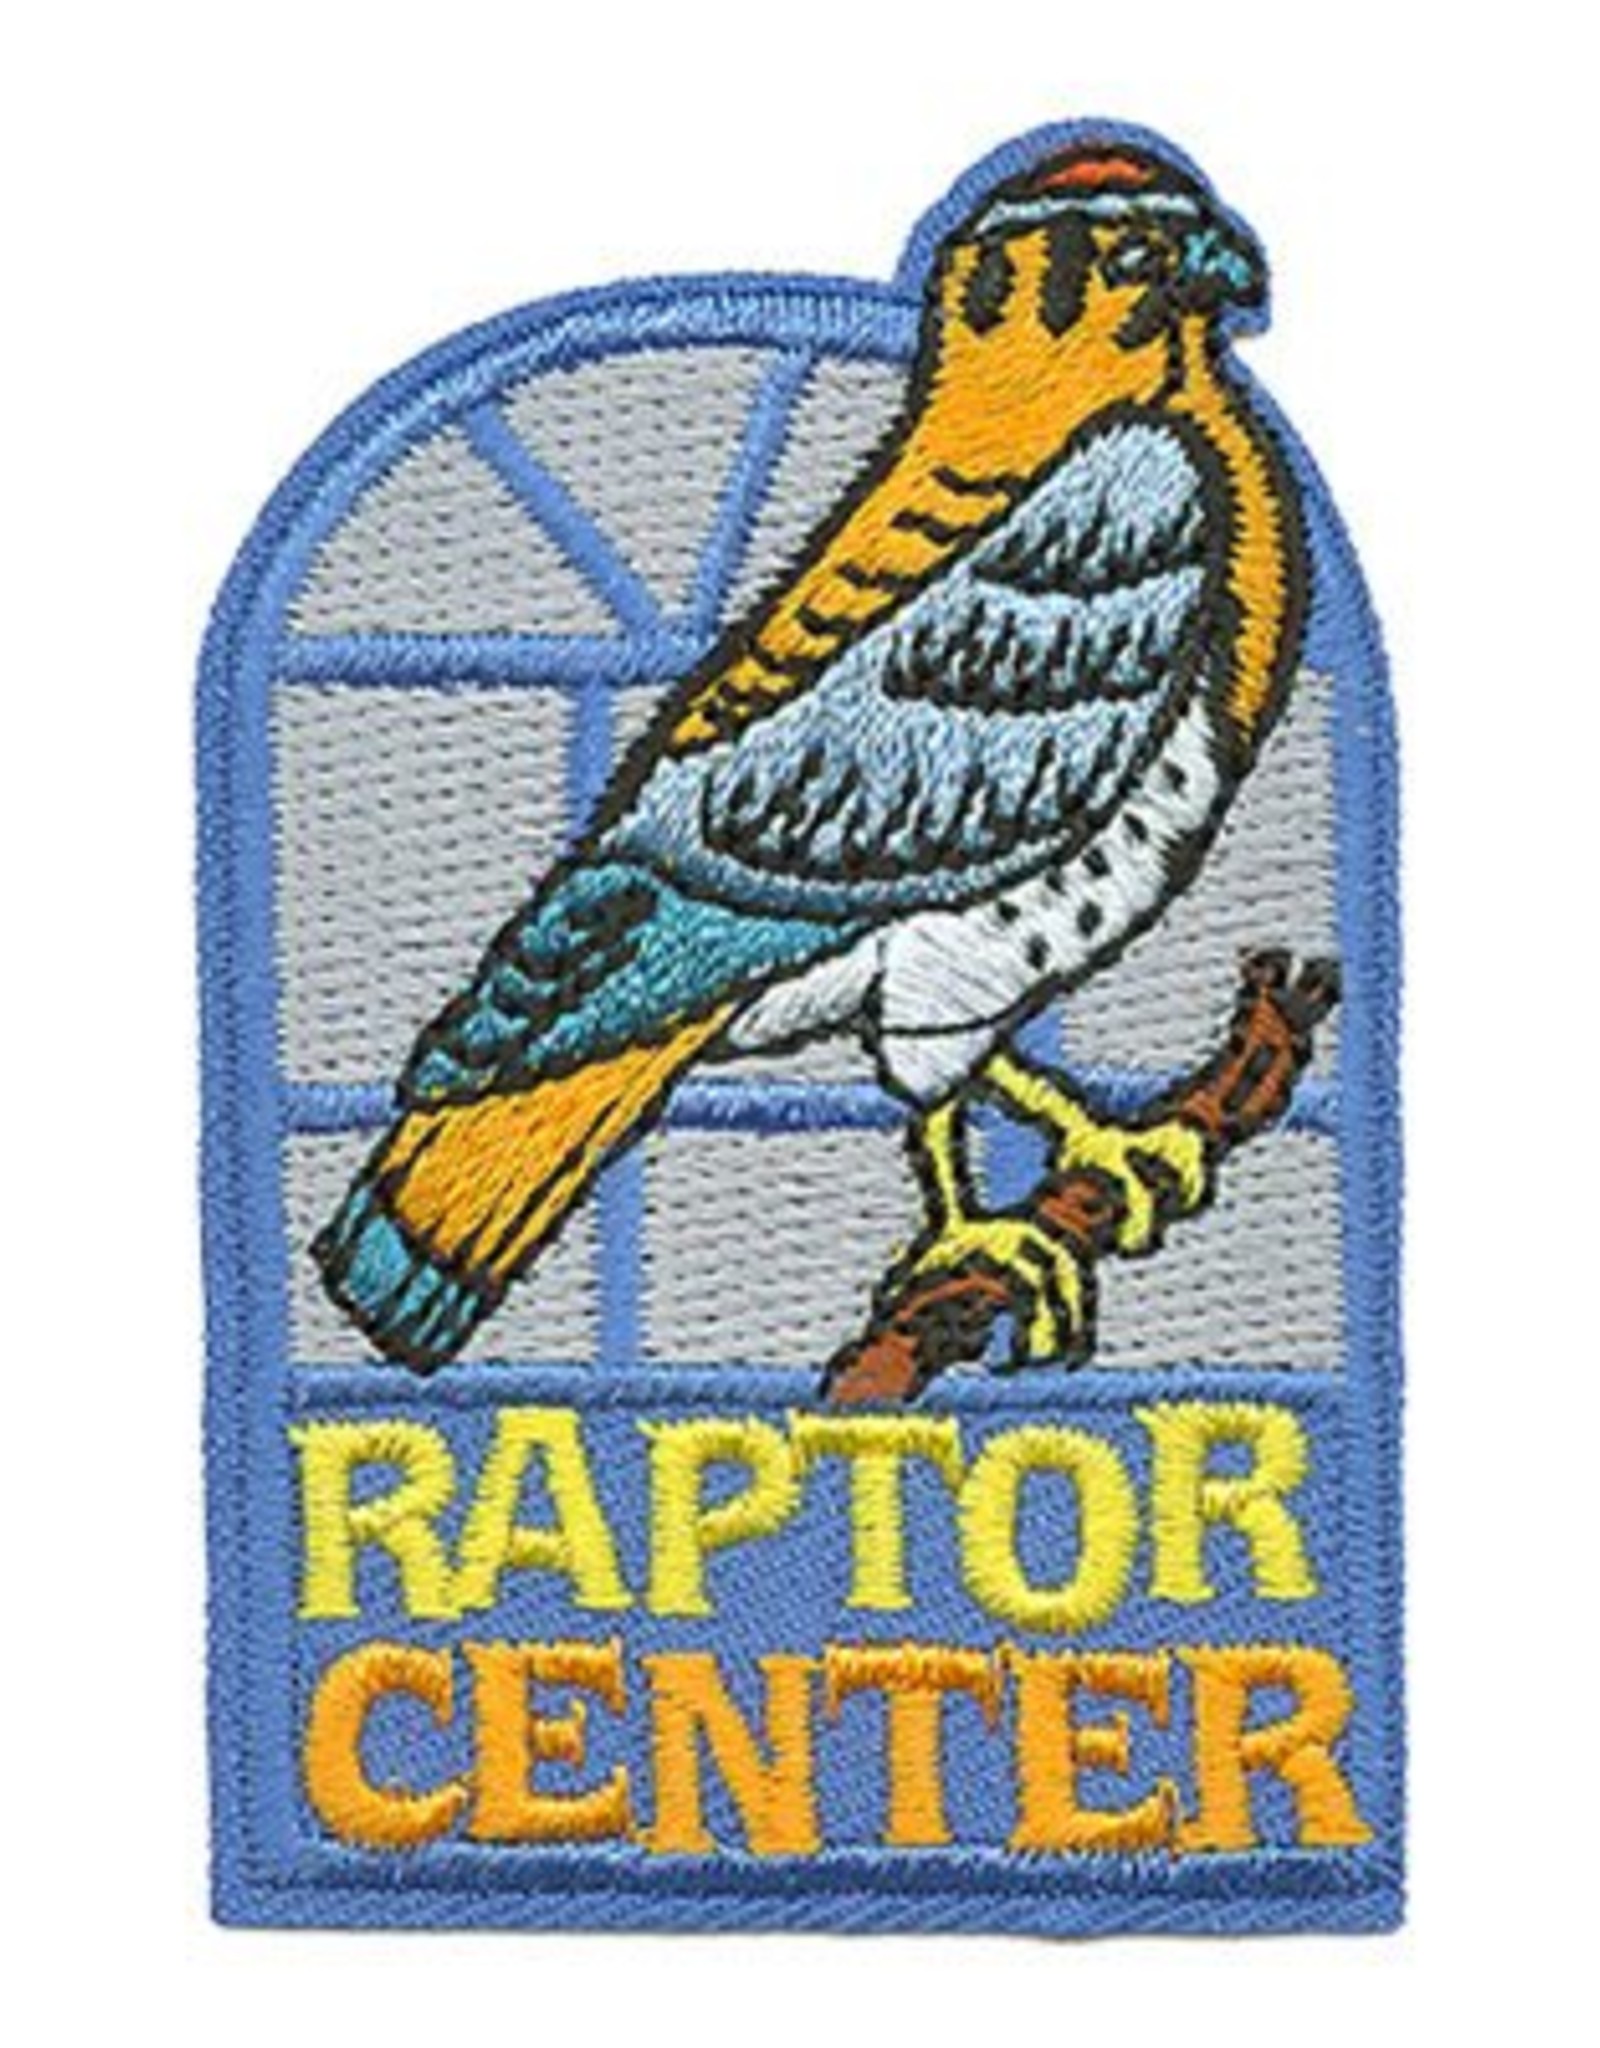 *Raptor Center Birds of Prey Fun Patch